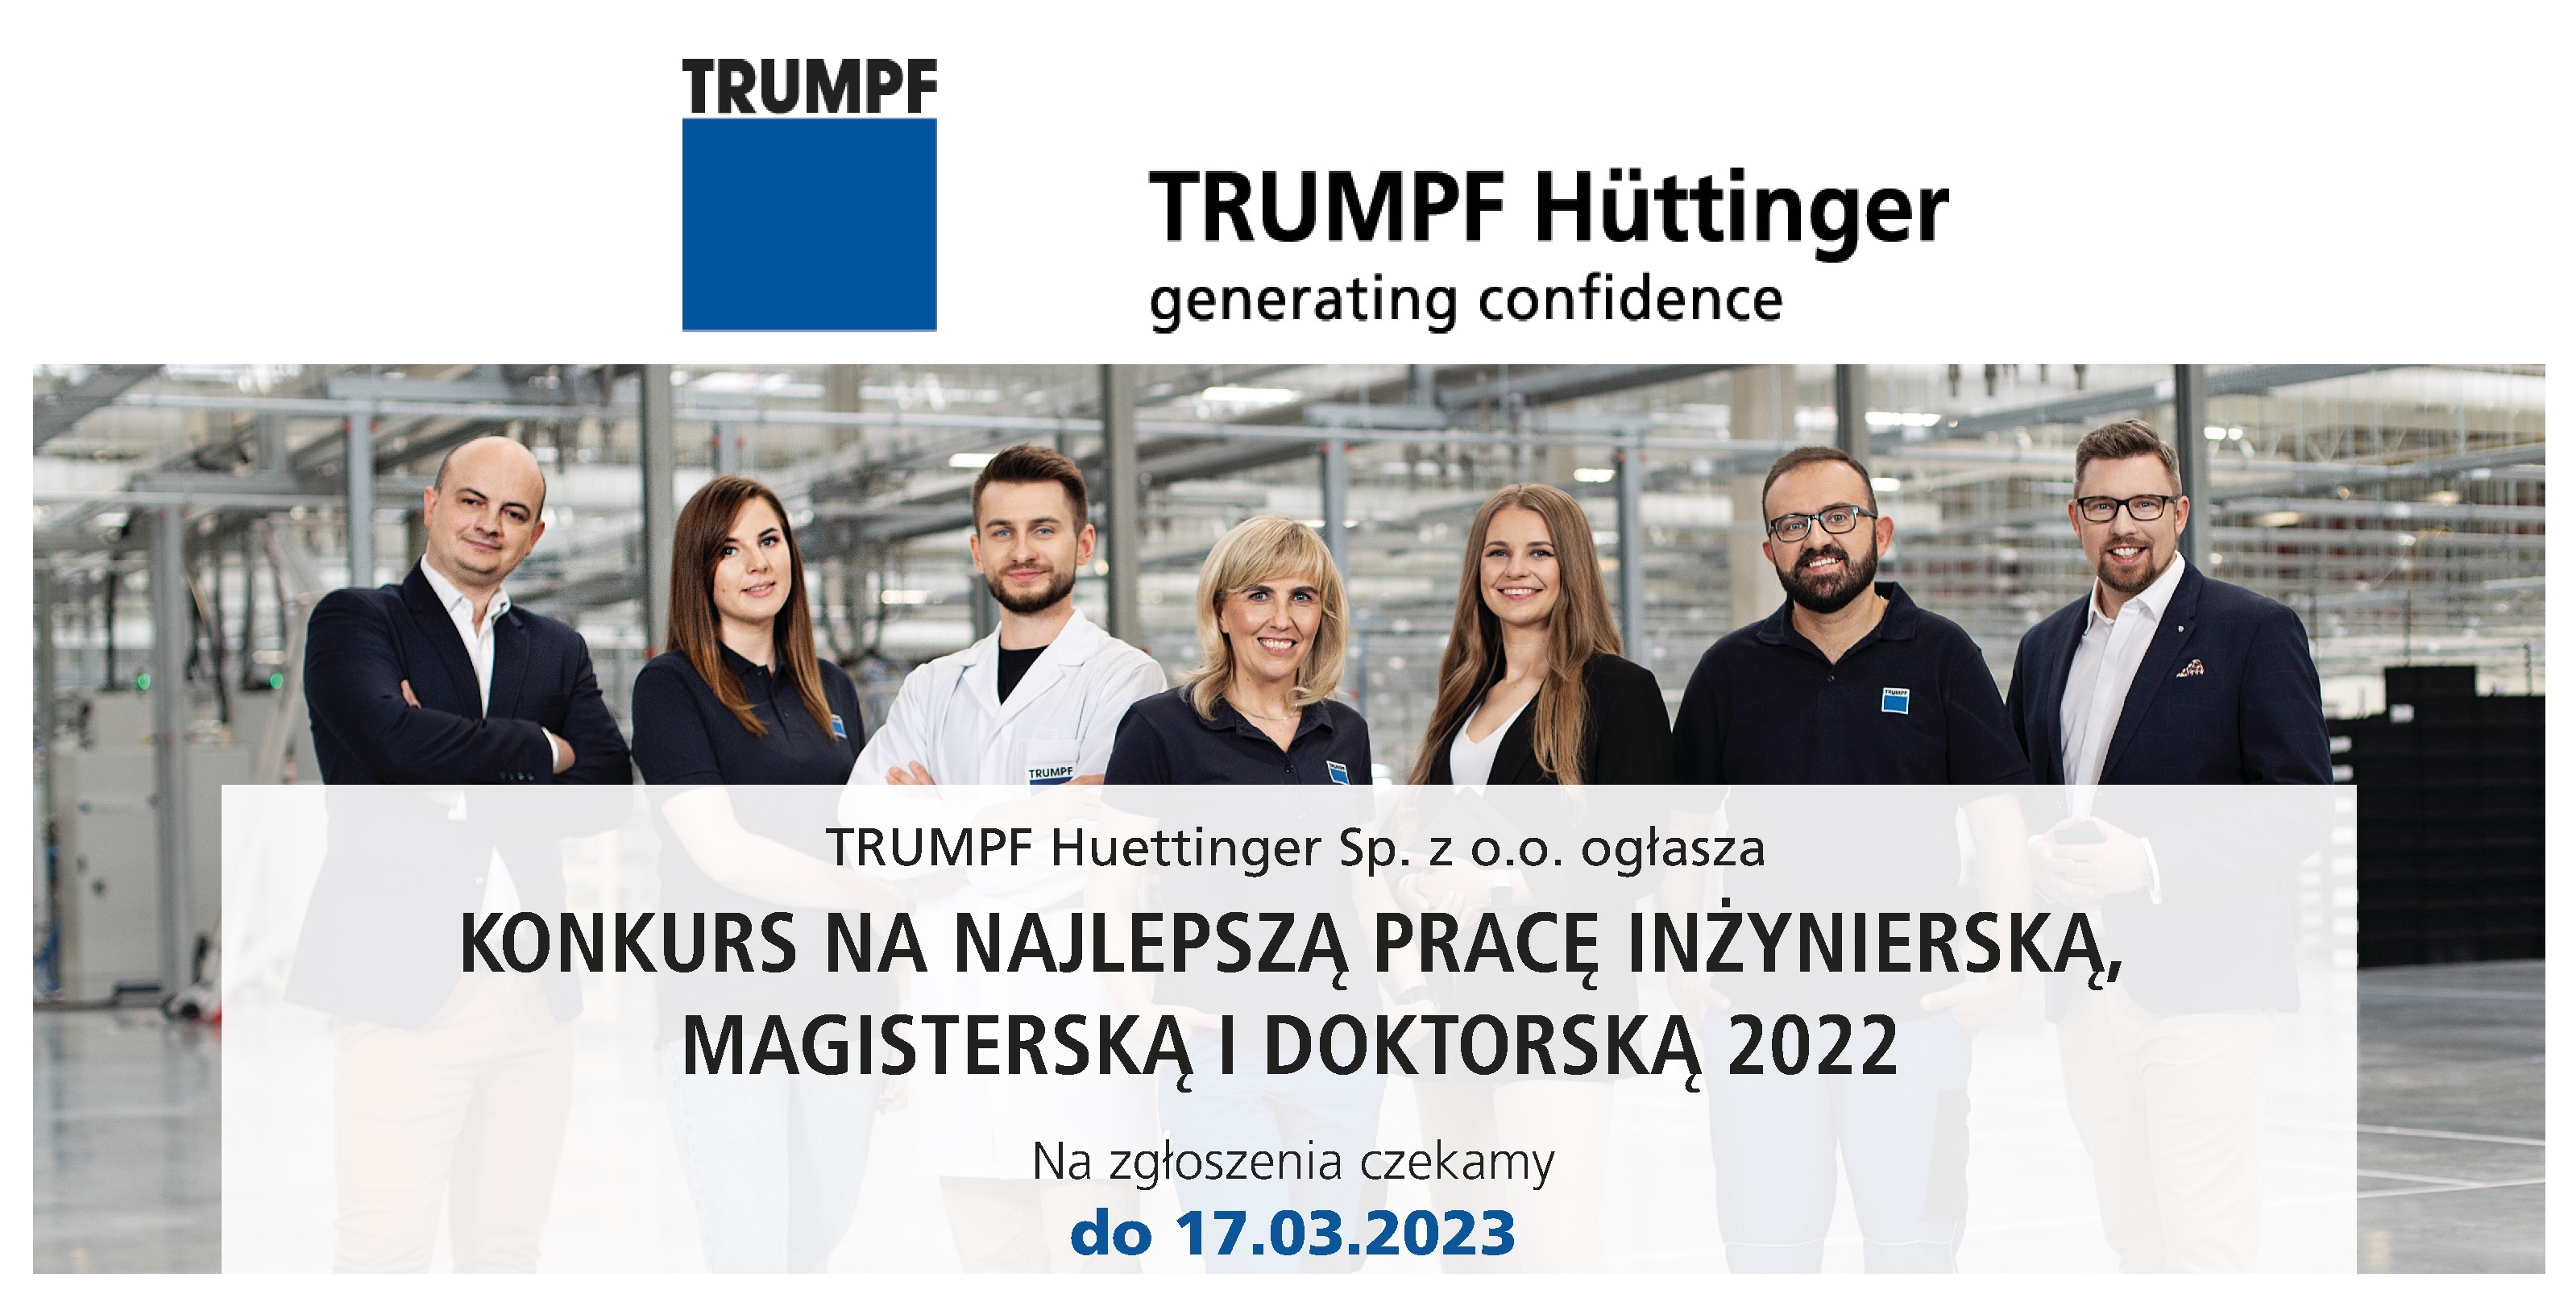 Ogólnopolski konkurs TRUMPF Huettinger na najlepszą pracę inżynierską, magisterską i doktorską 